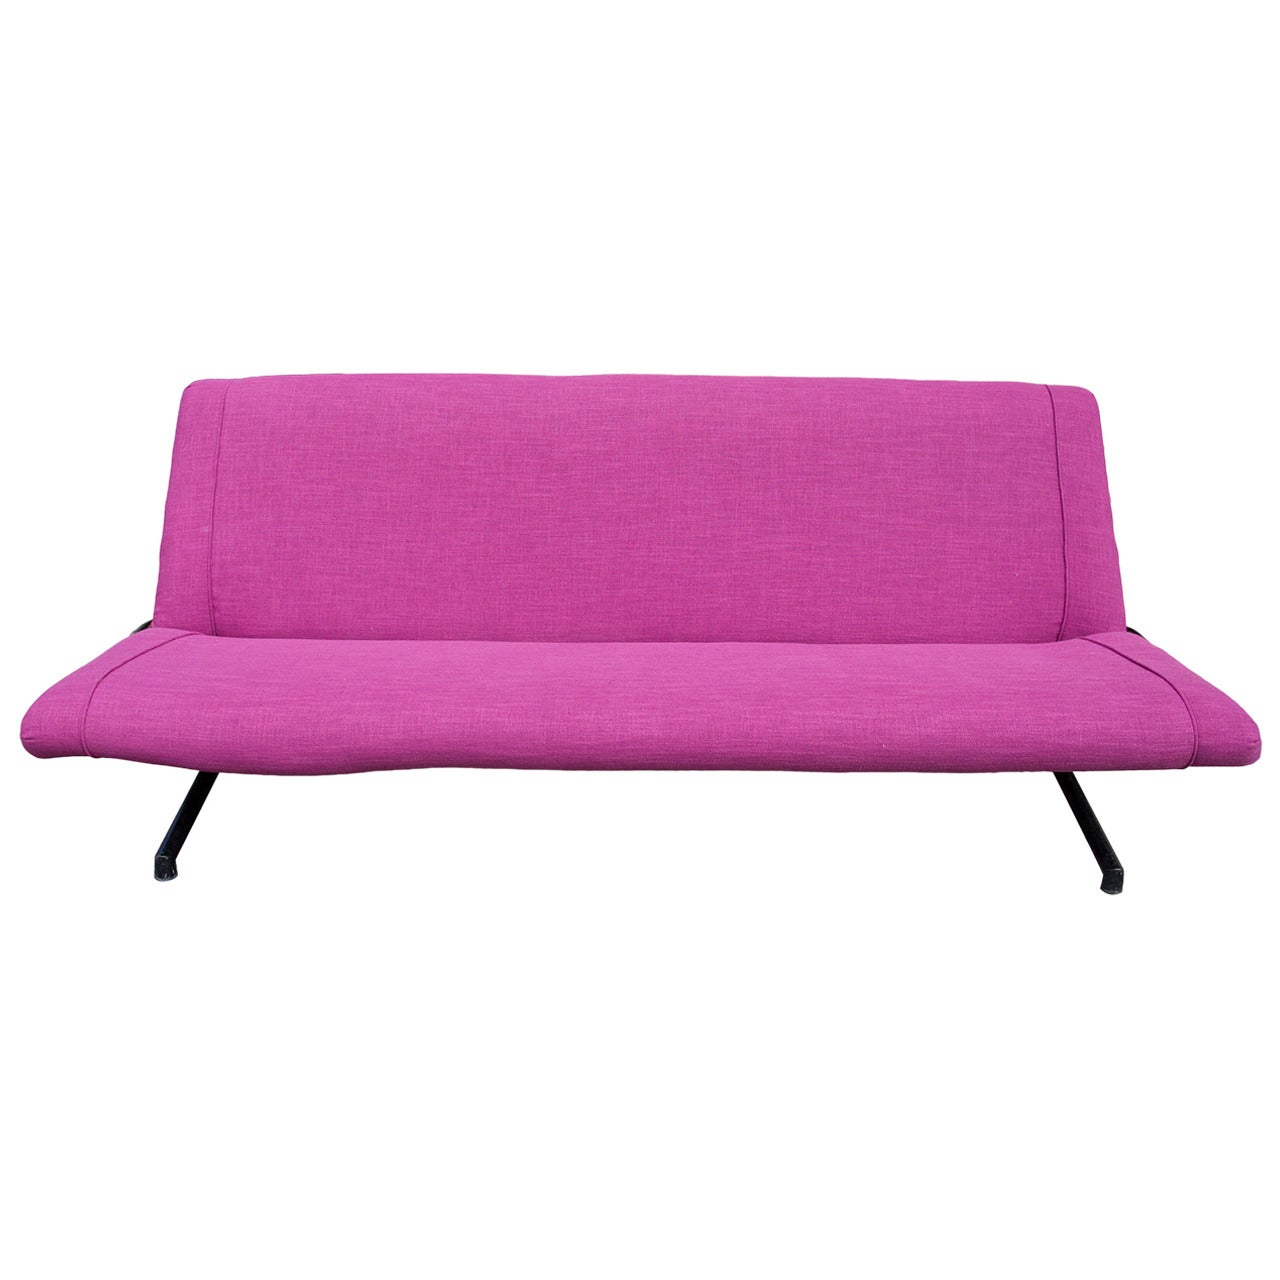 D70 Sofa by Osvaldo Borsani